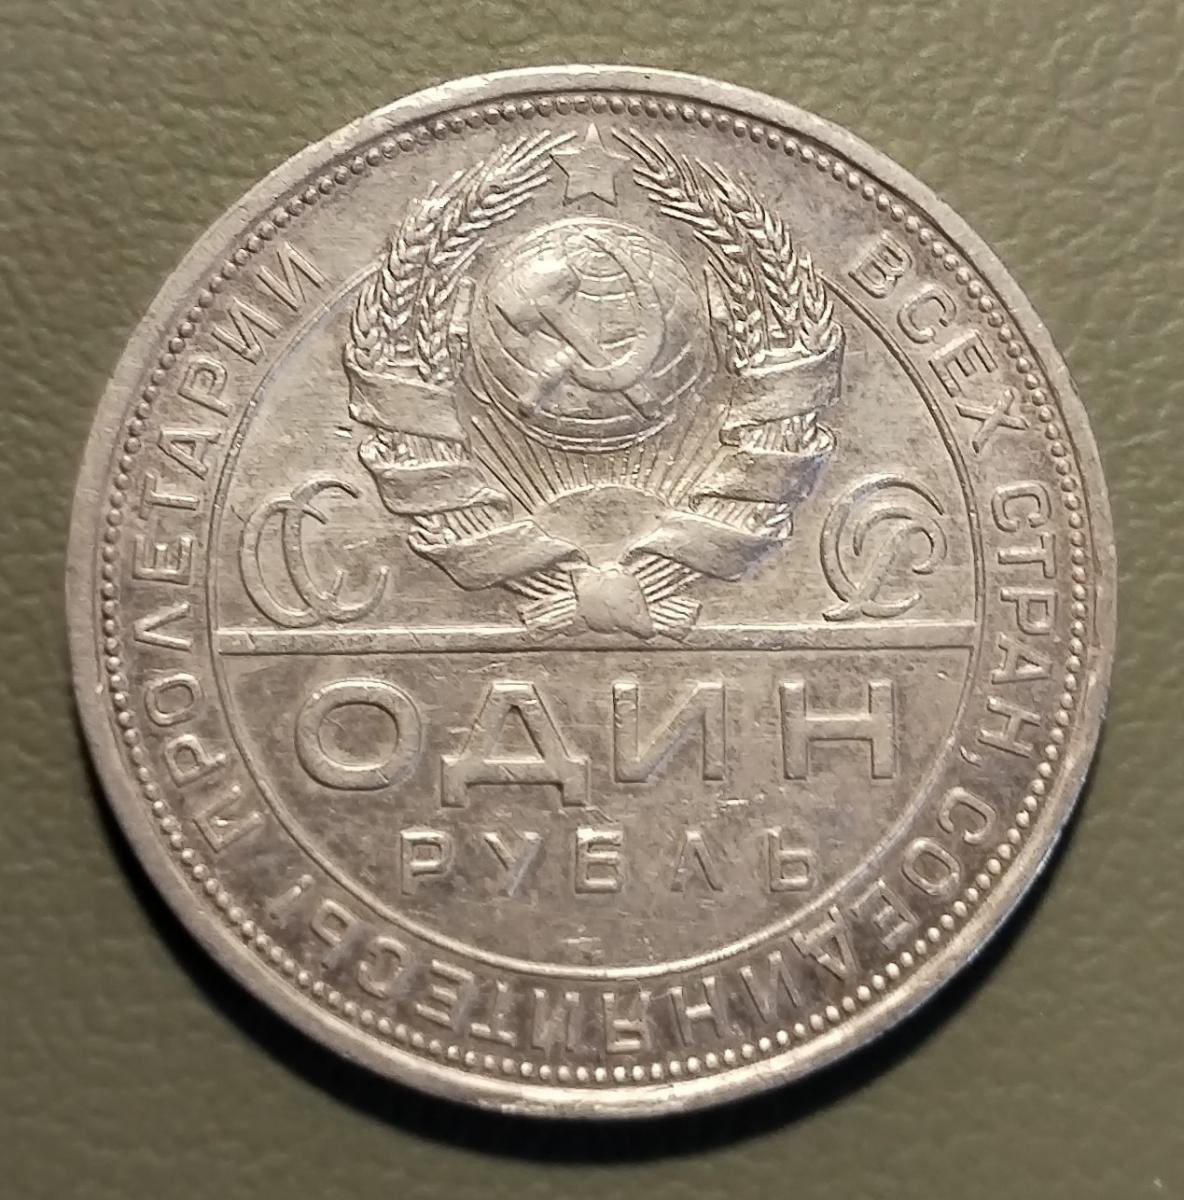 Rusko, ZSSR, 1 rubeľ, rok razby 1924, striebro, originál. - Európa numizmatika